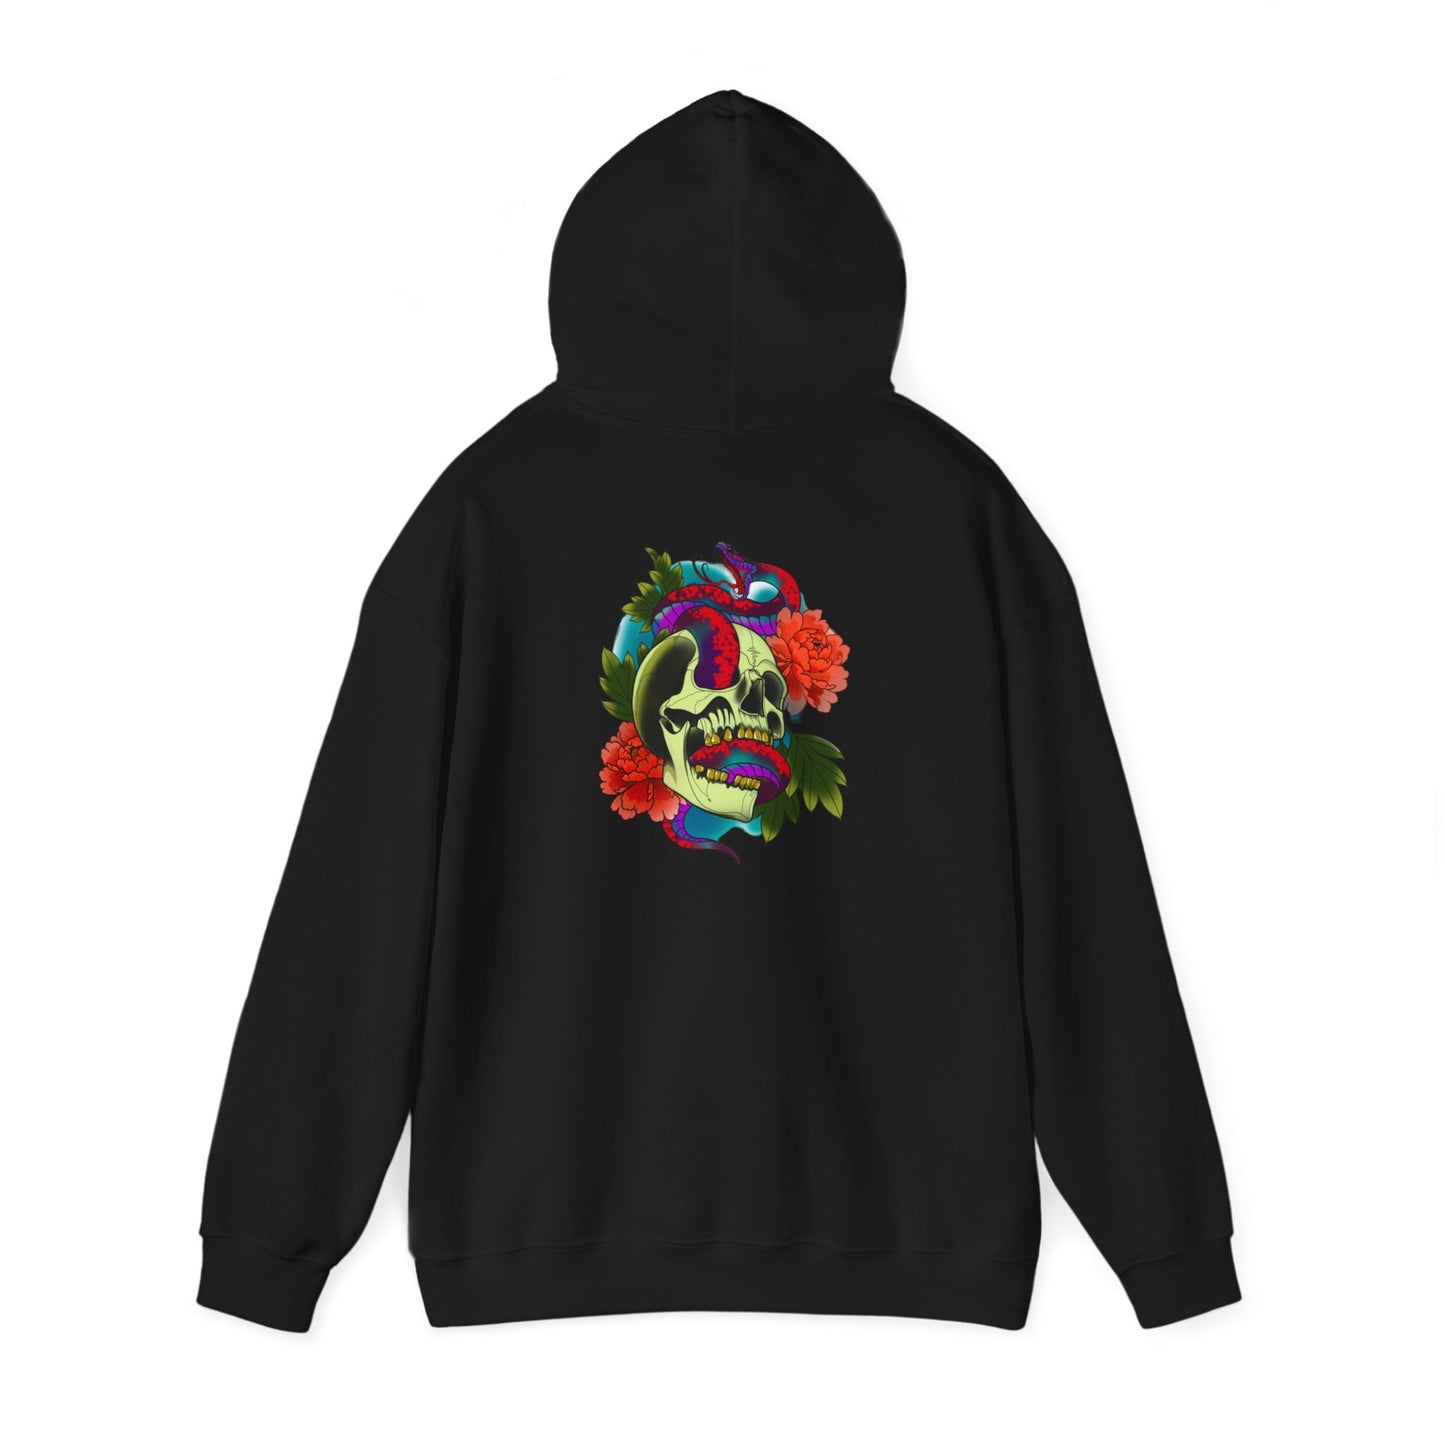 Skull and snake Hooded Sweatshirt